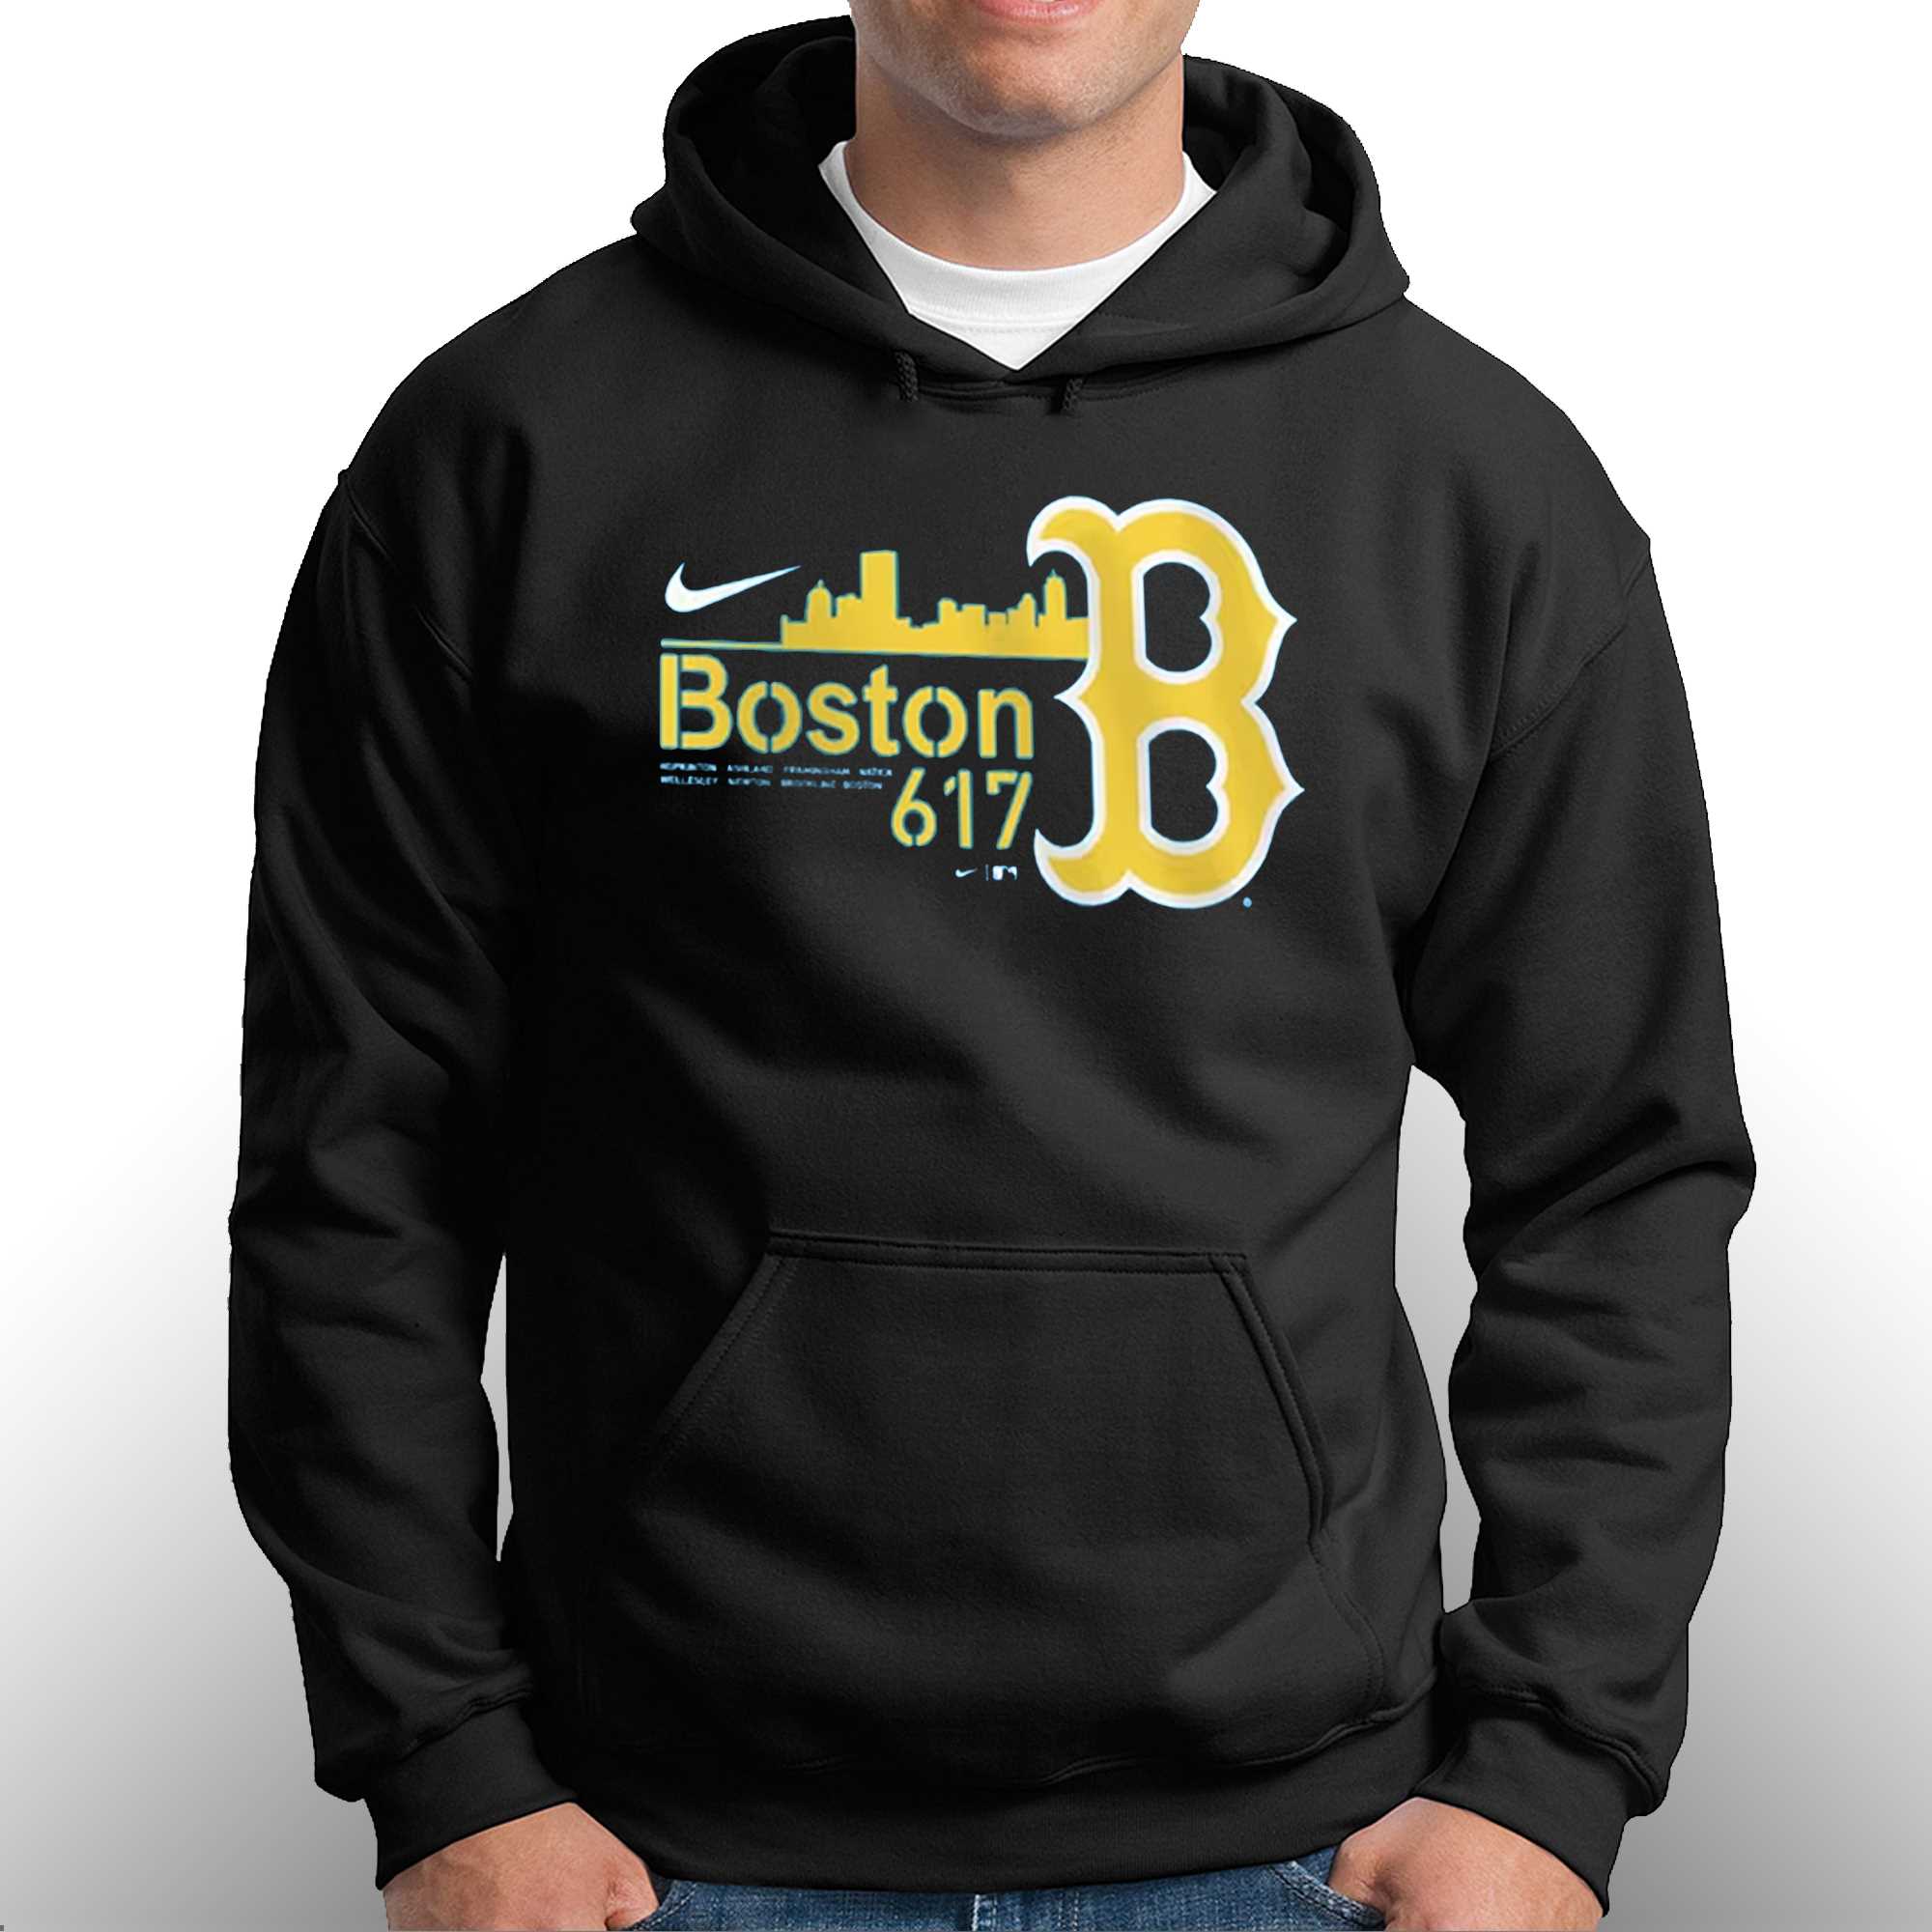 boston city connect shirt